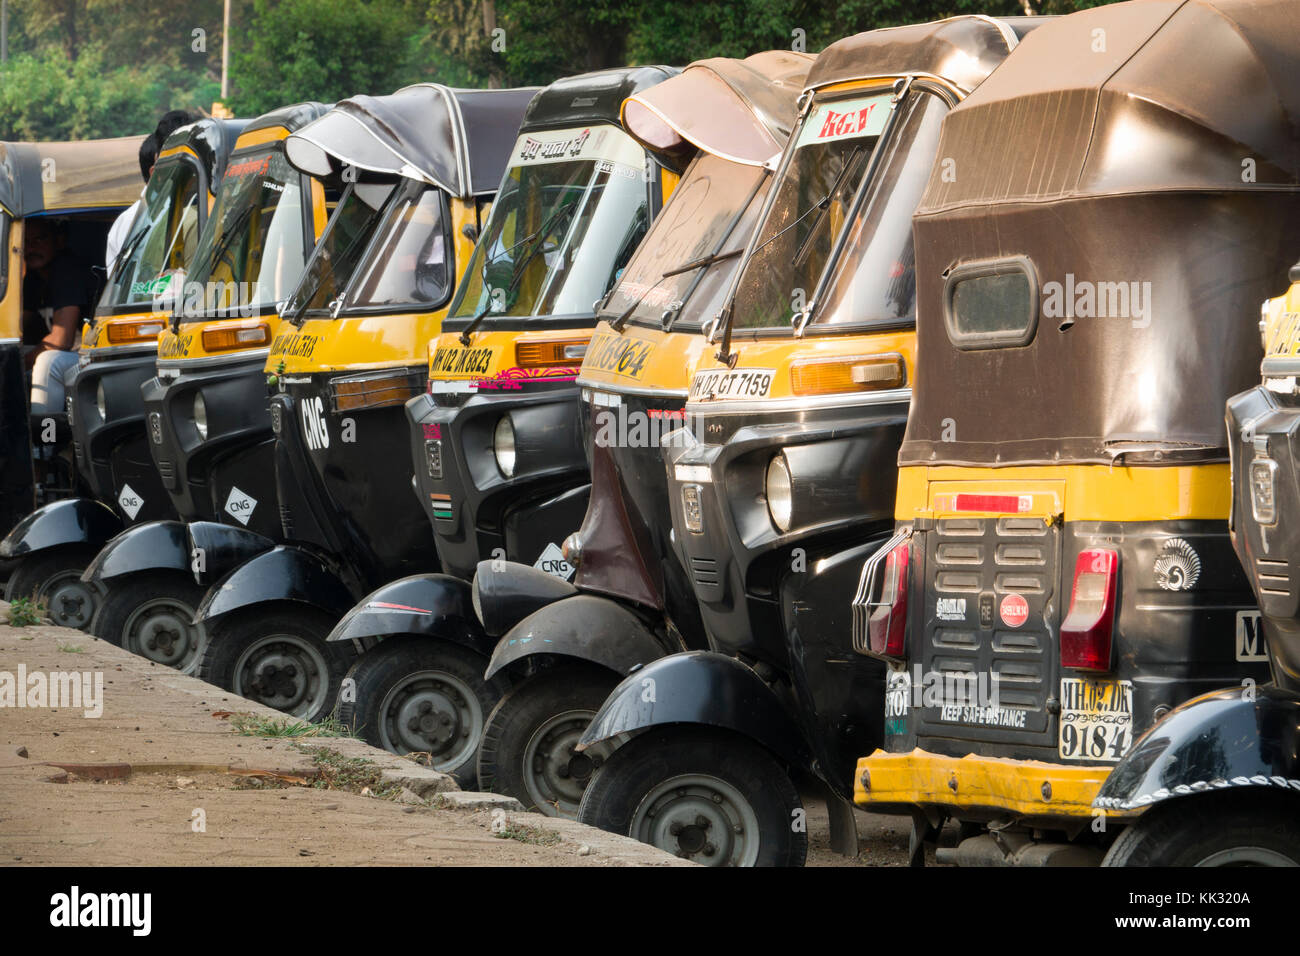 Auto rickshaws lined up on Juhu Versova road, Mumbai Stock Photo